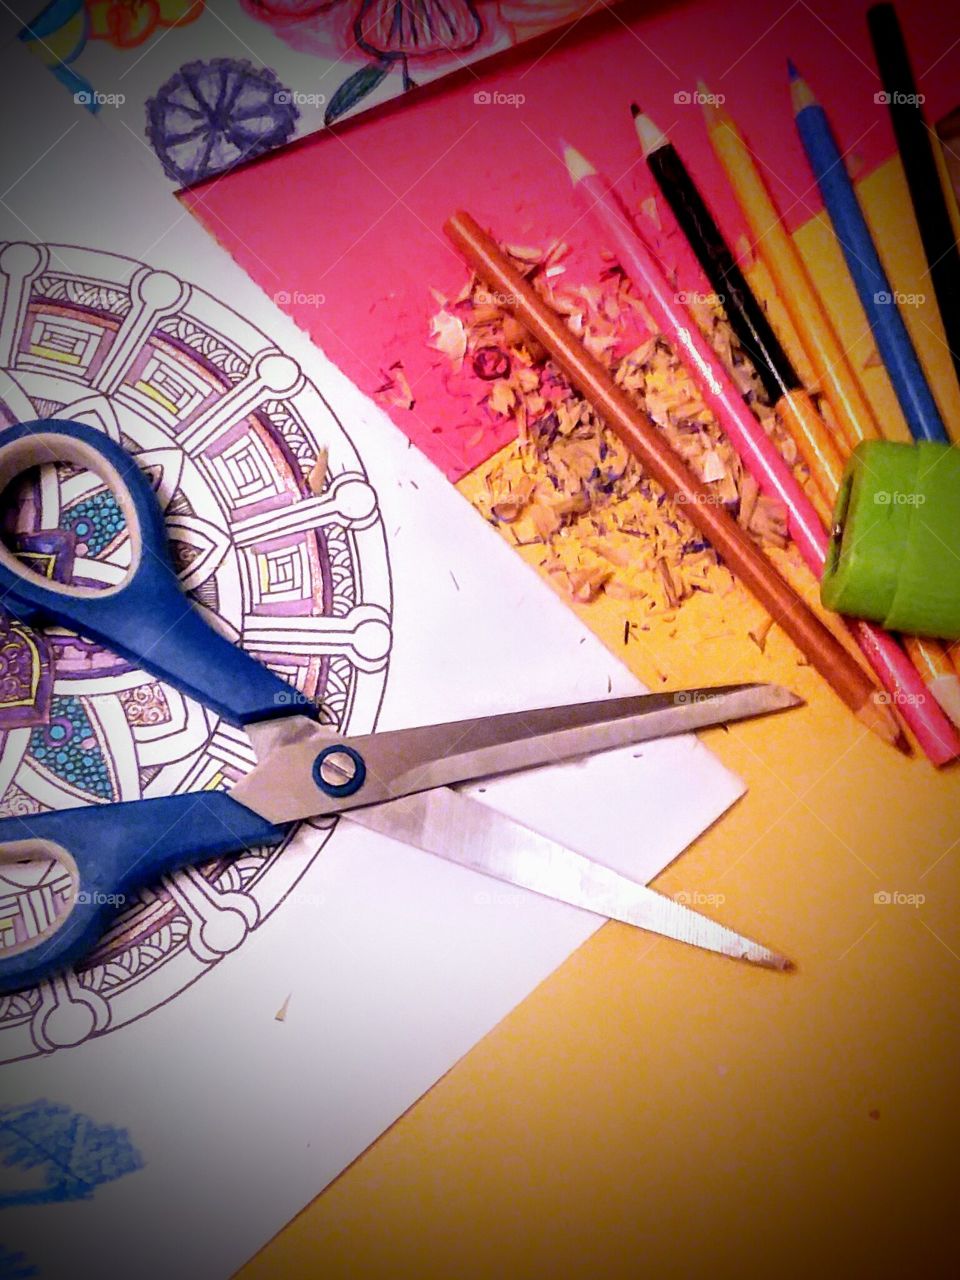 Art Supplies (paper pencils scissors)